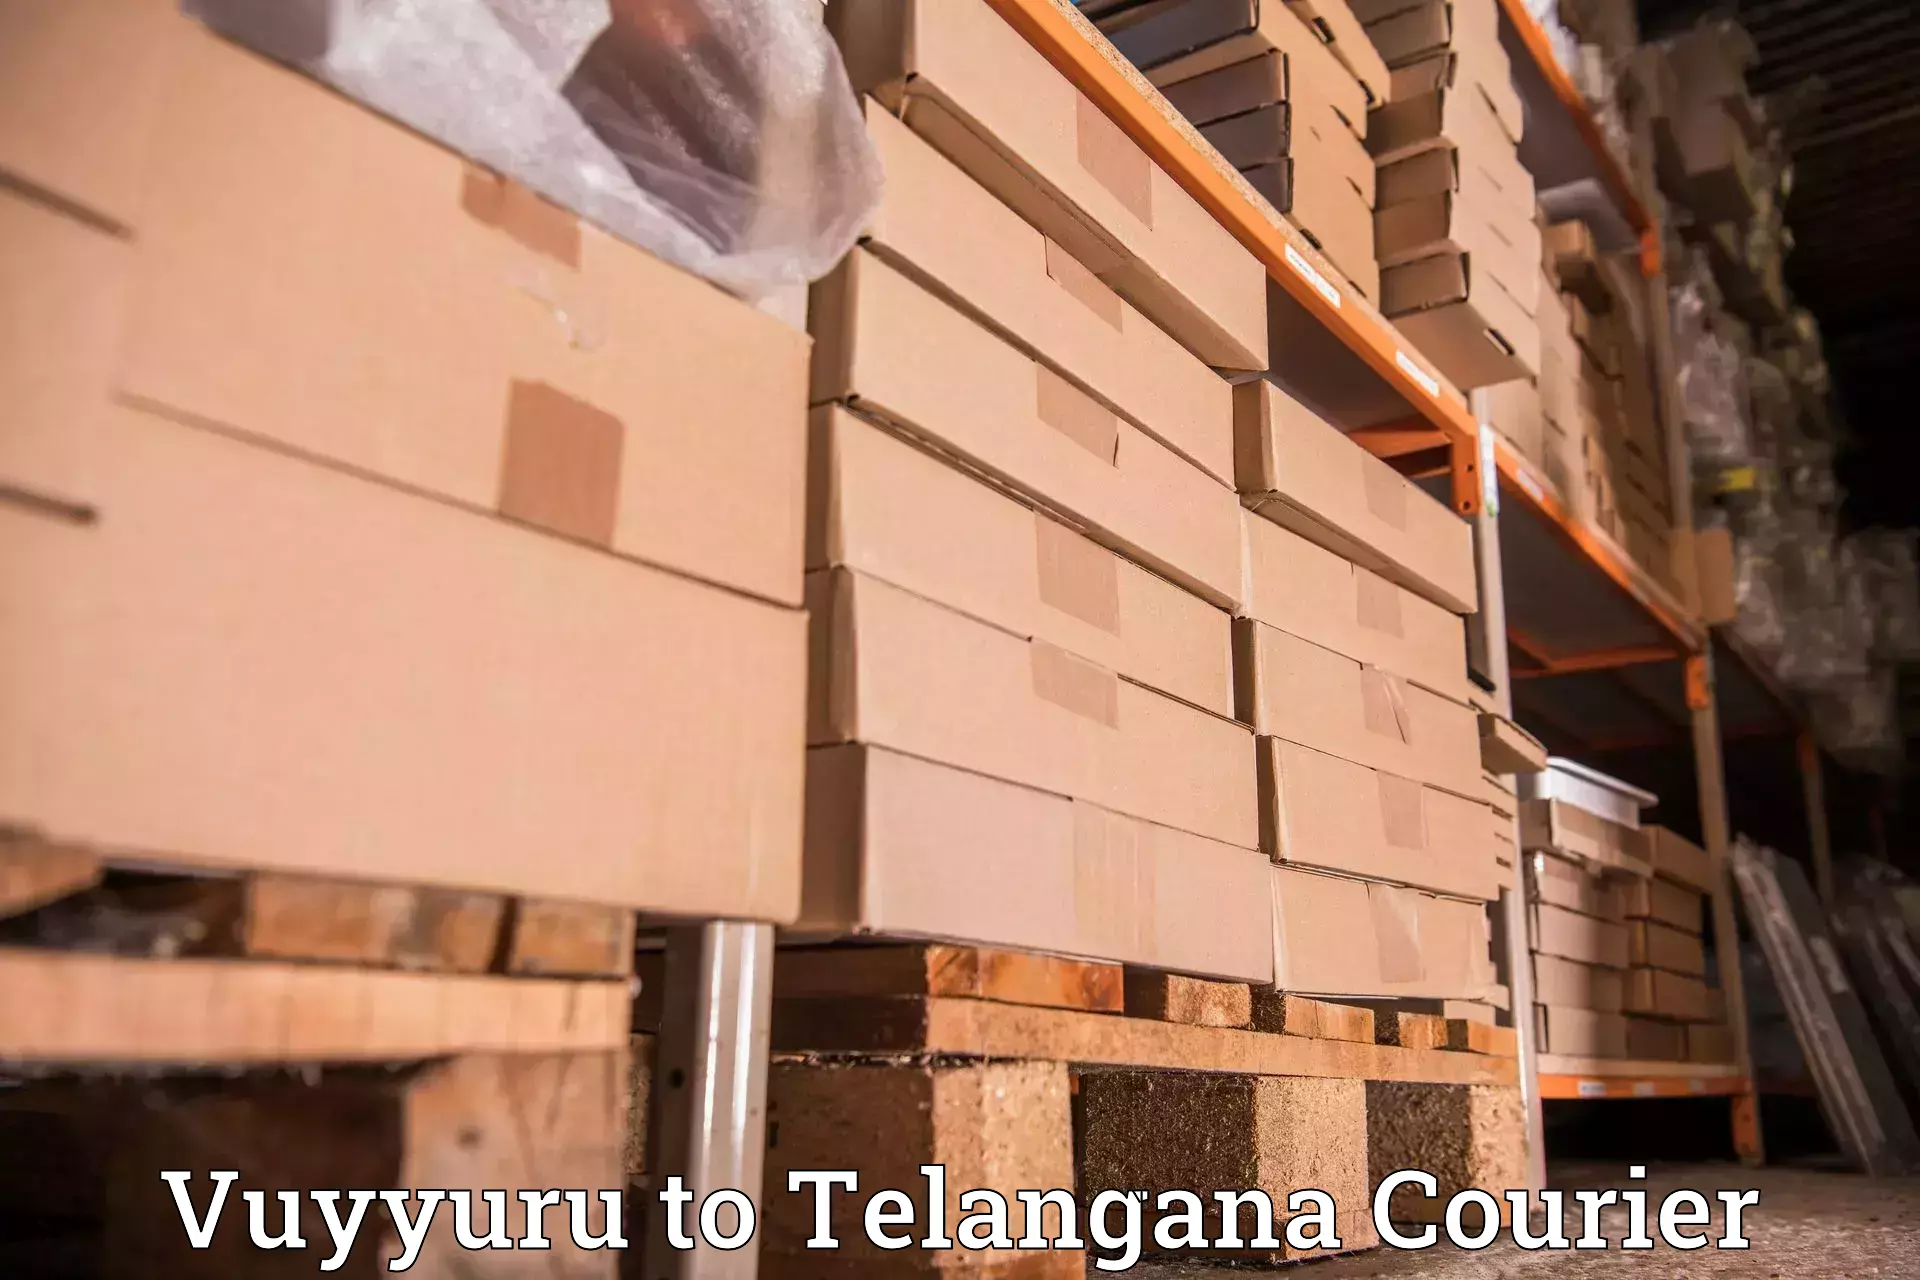 Full-service courier options Vuyyuru to Gangadhara